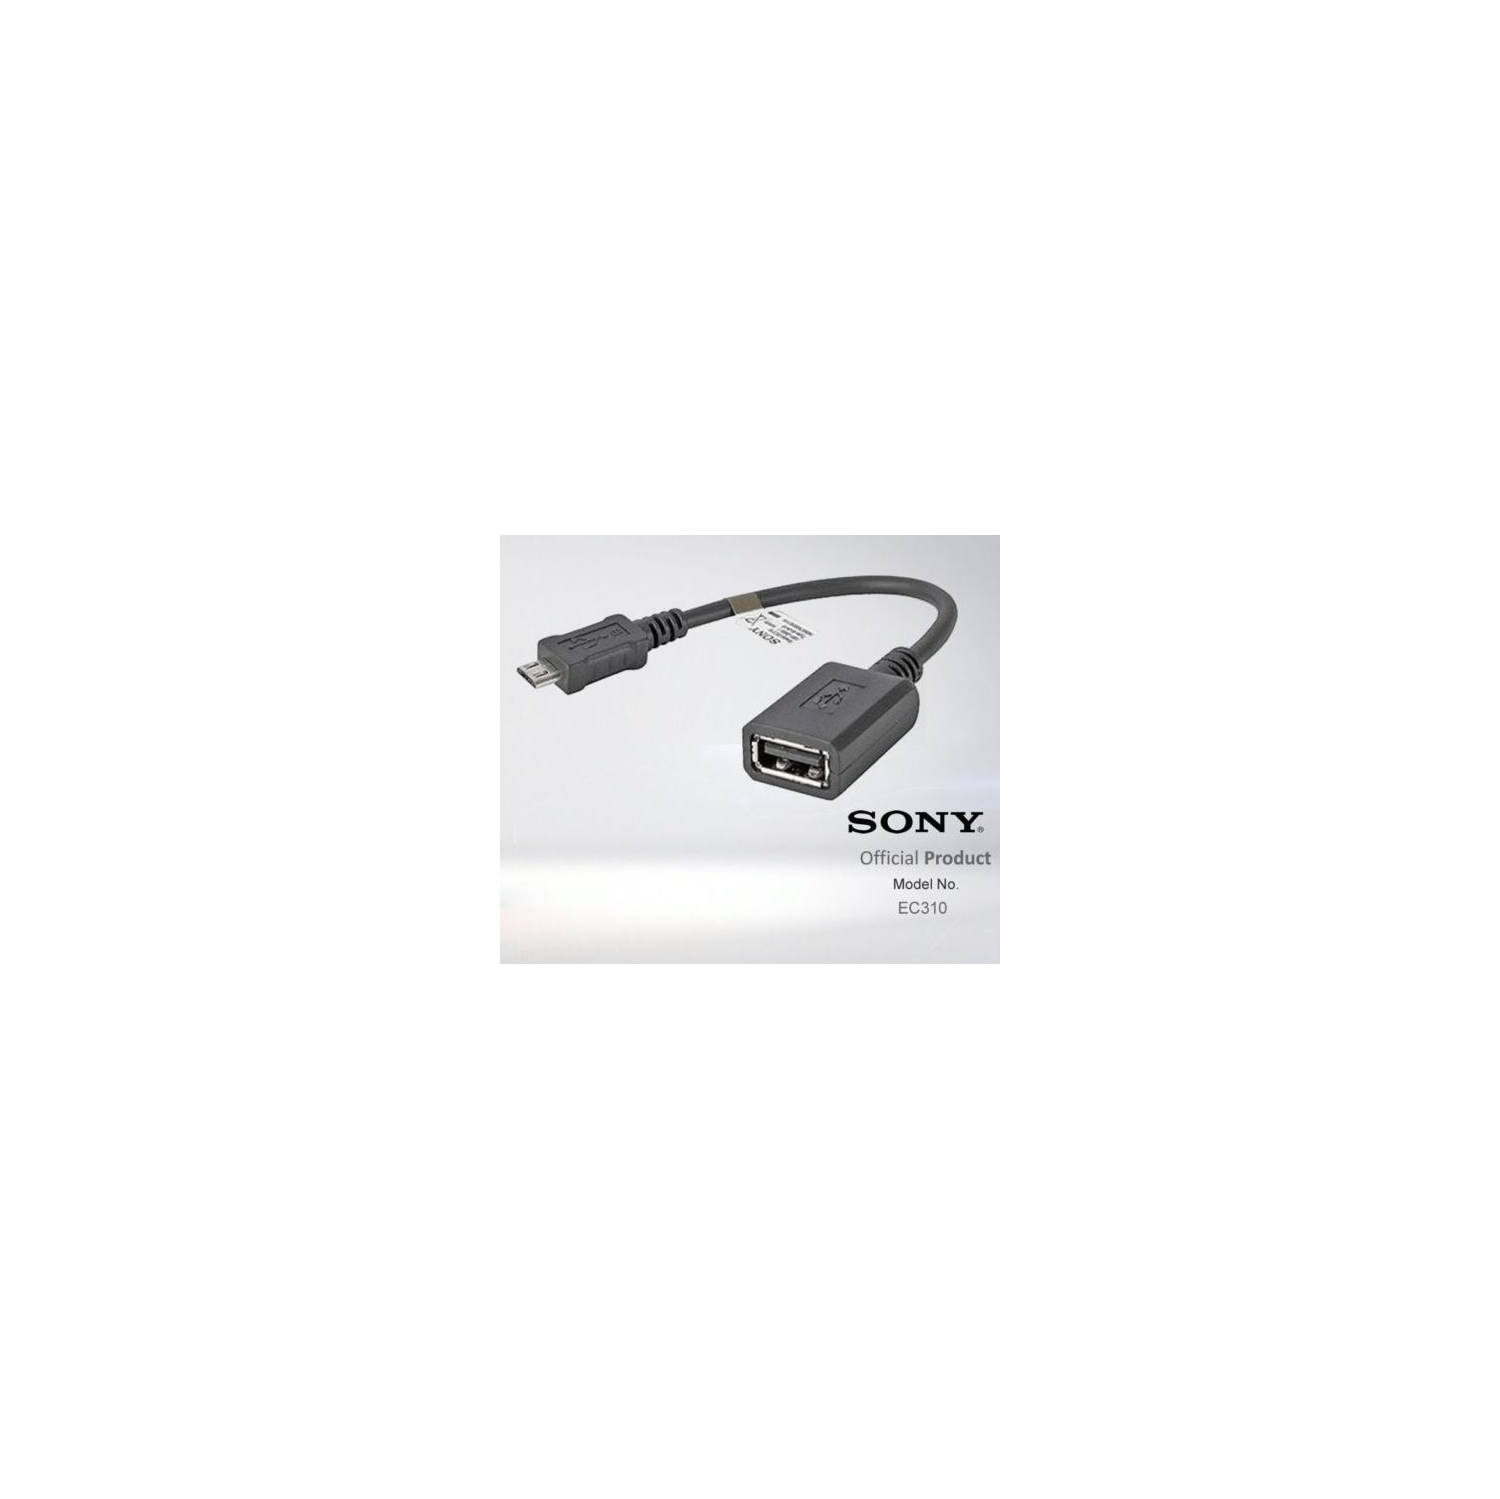 SONY EC310 MICRO USB TO USB OTG ADAPTER CABLE FOR SONY Z2 Z3 Z4 Z5 E4 E5 M5 - BLACK